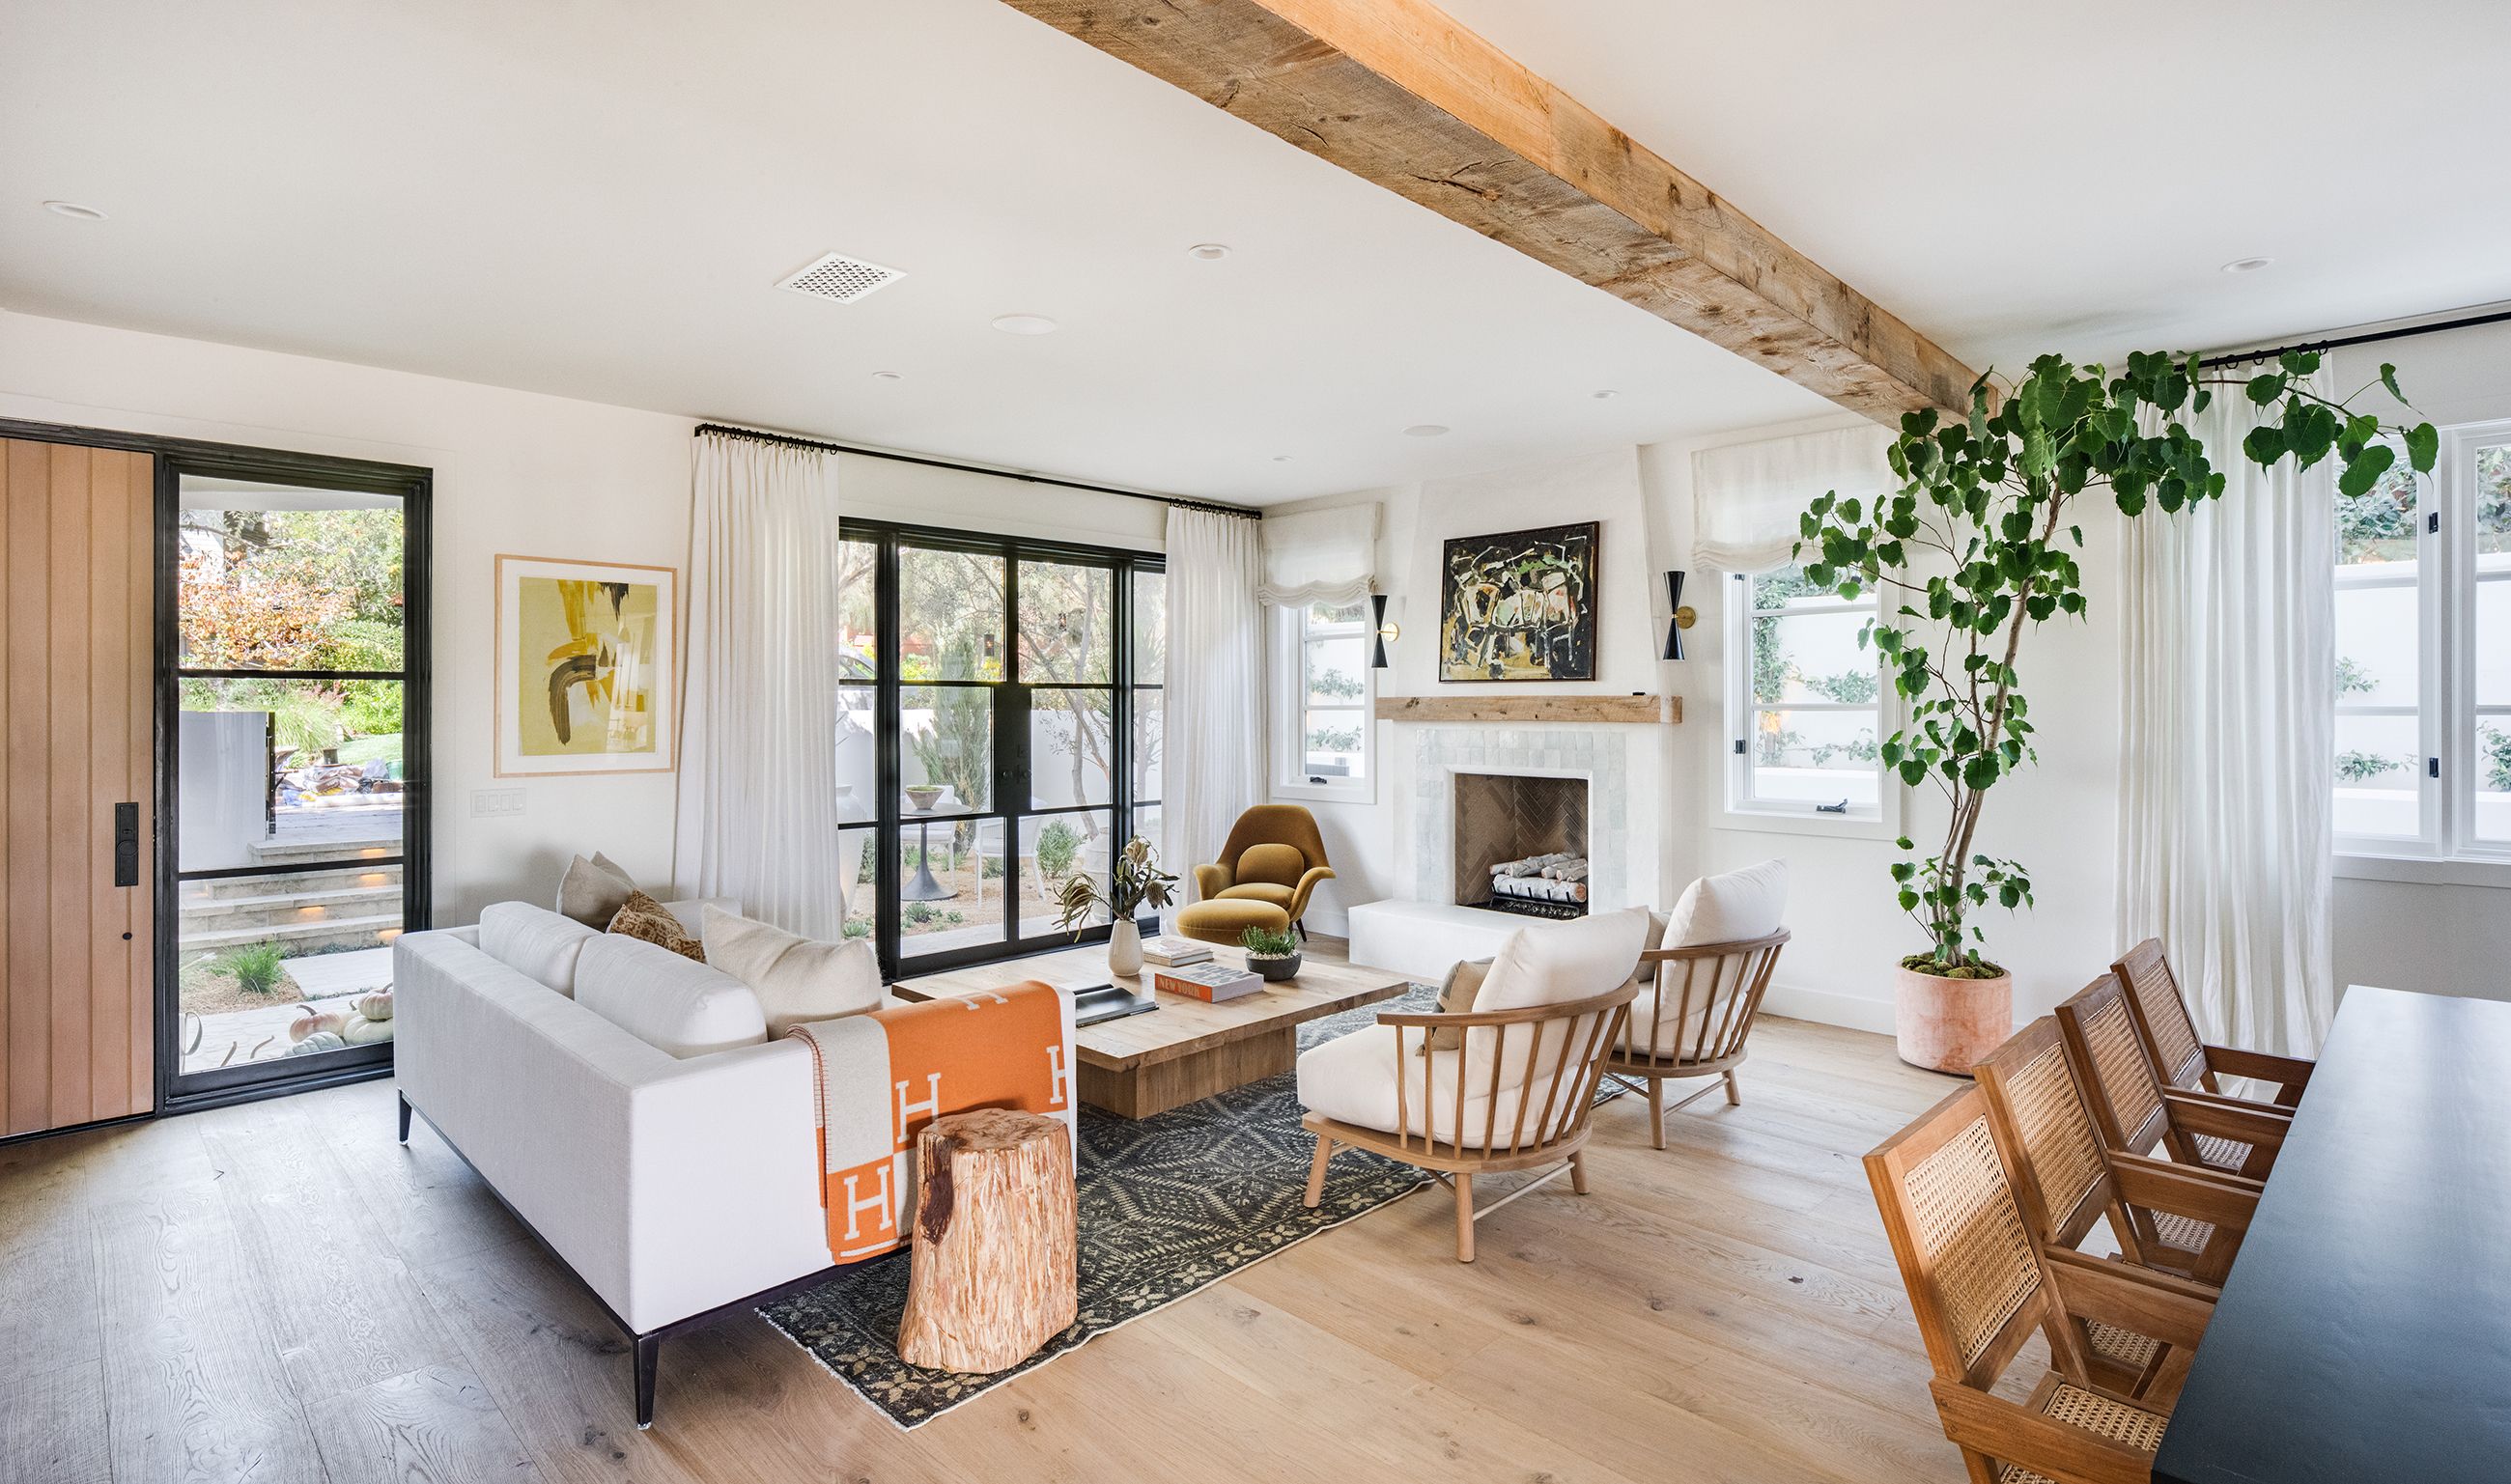 70 Stunning Living Room Ideas Chic, Designing A Living Room